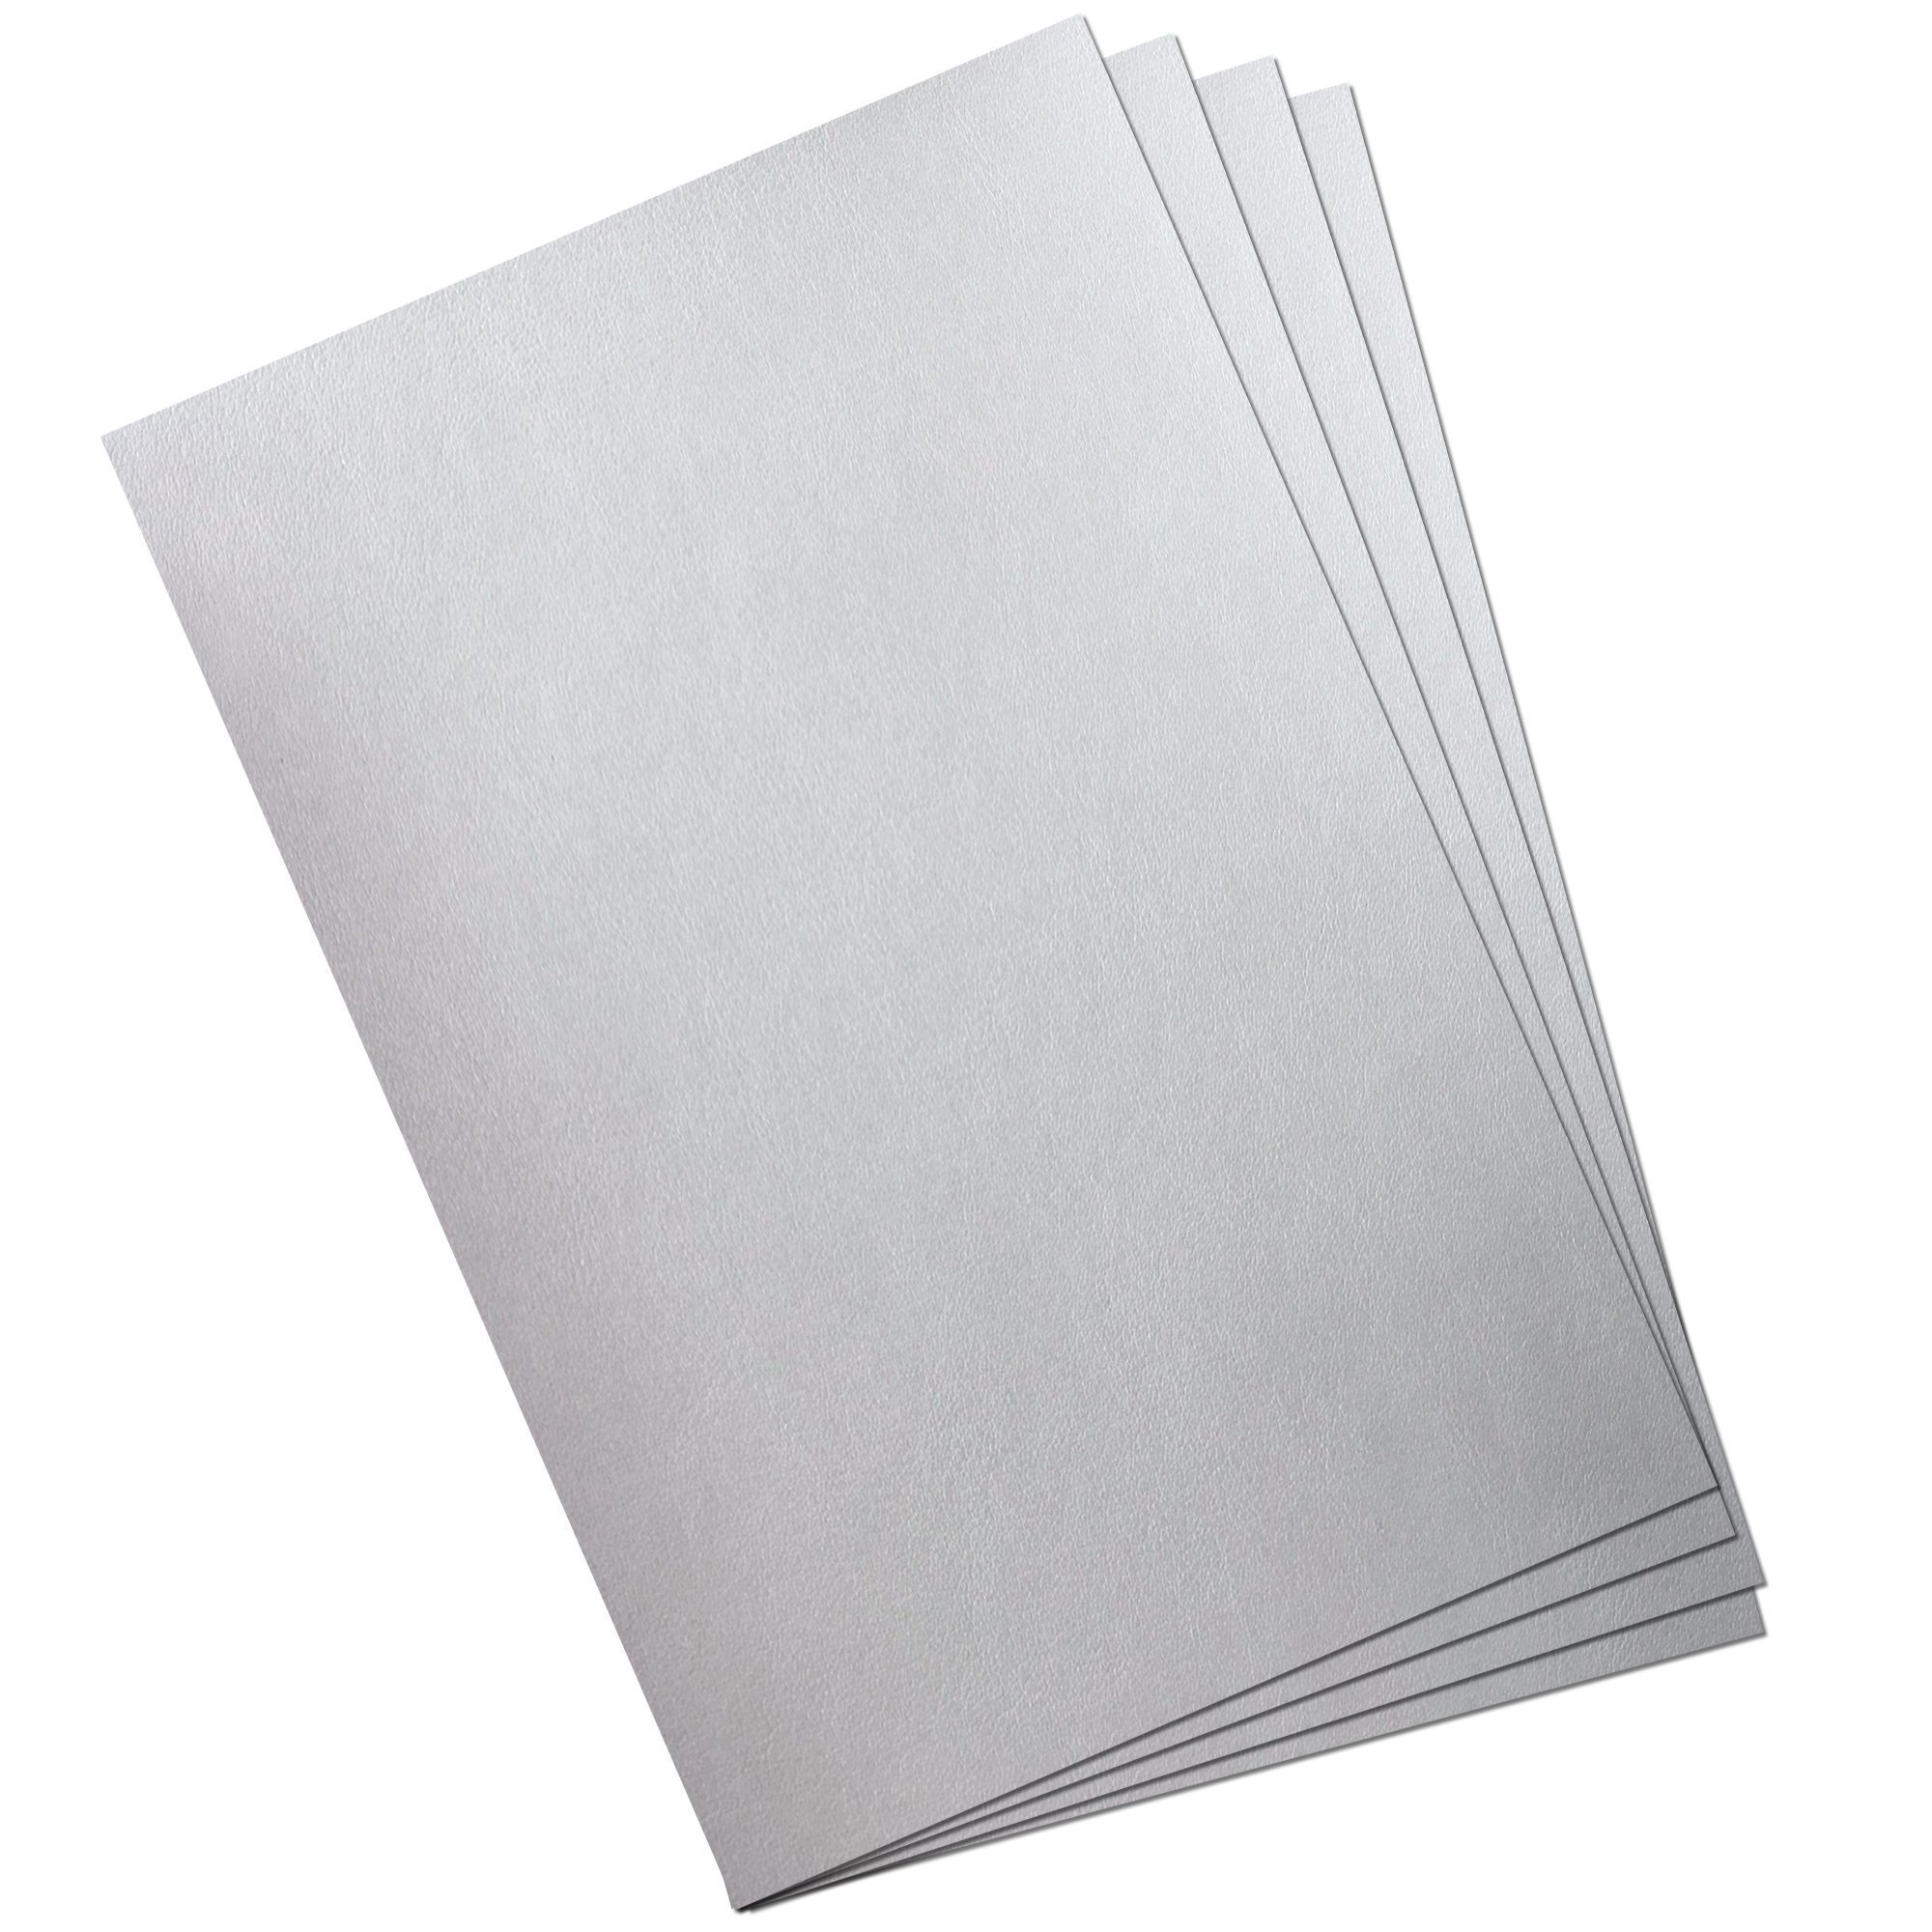 Resim Kağıdı Dokulu 120 Gr 70x100 cm 100'lü Paket